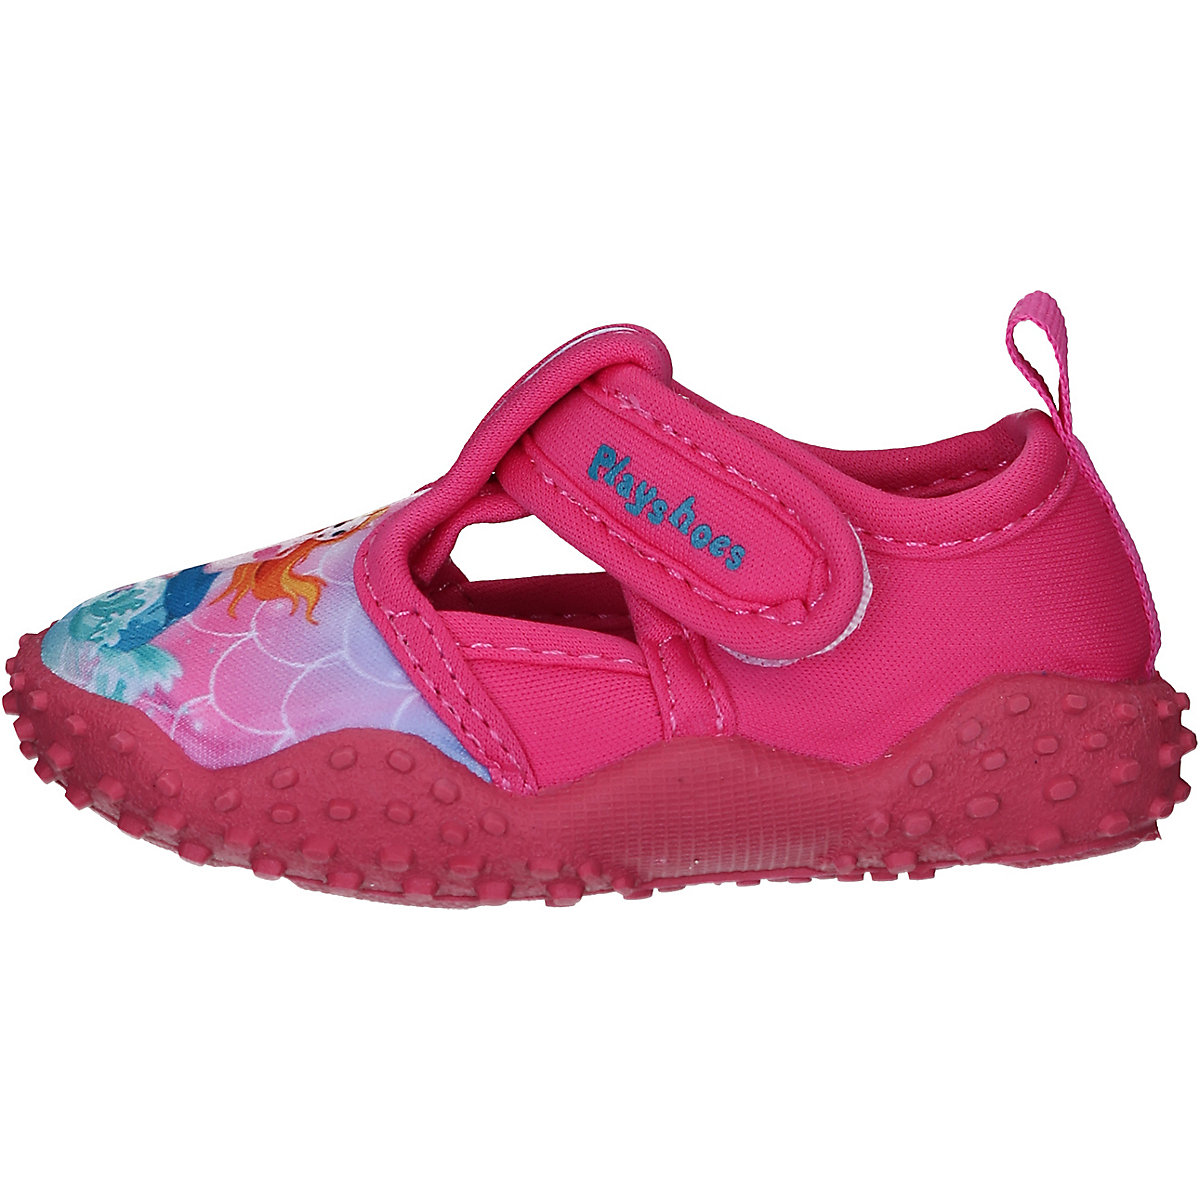 Playshoes Aqua-Schuh Meerjungfrau Badeschuhe für Mädchen pink